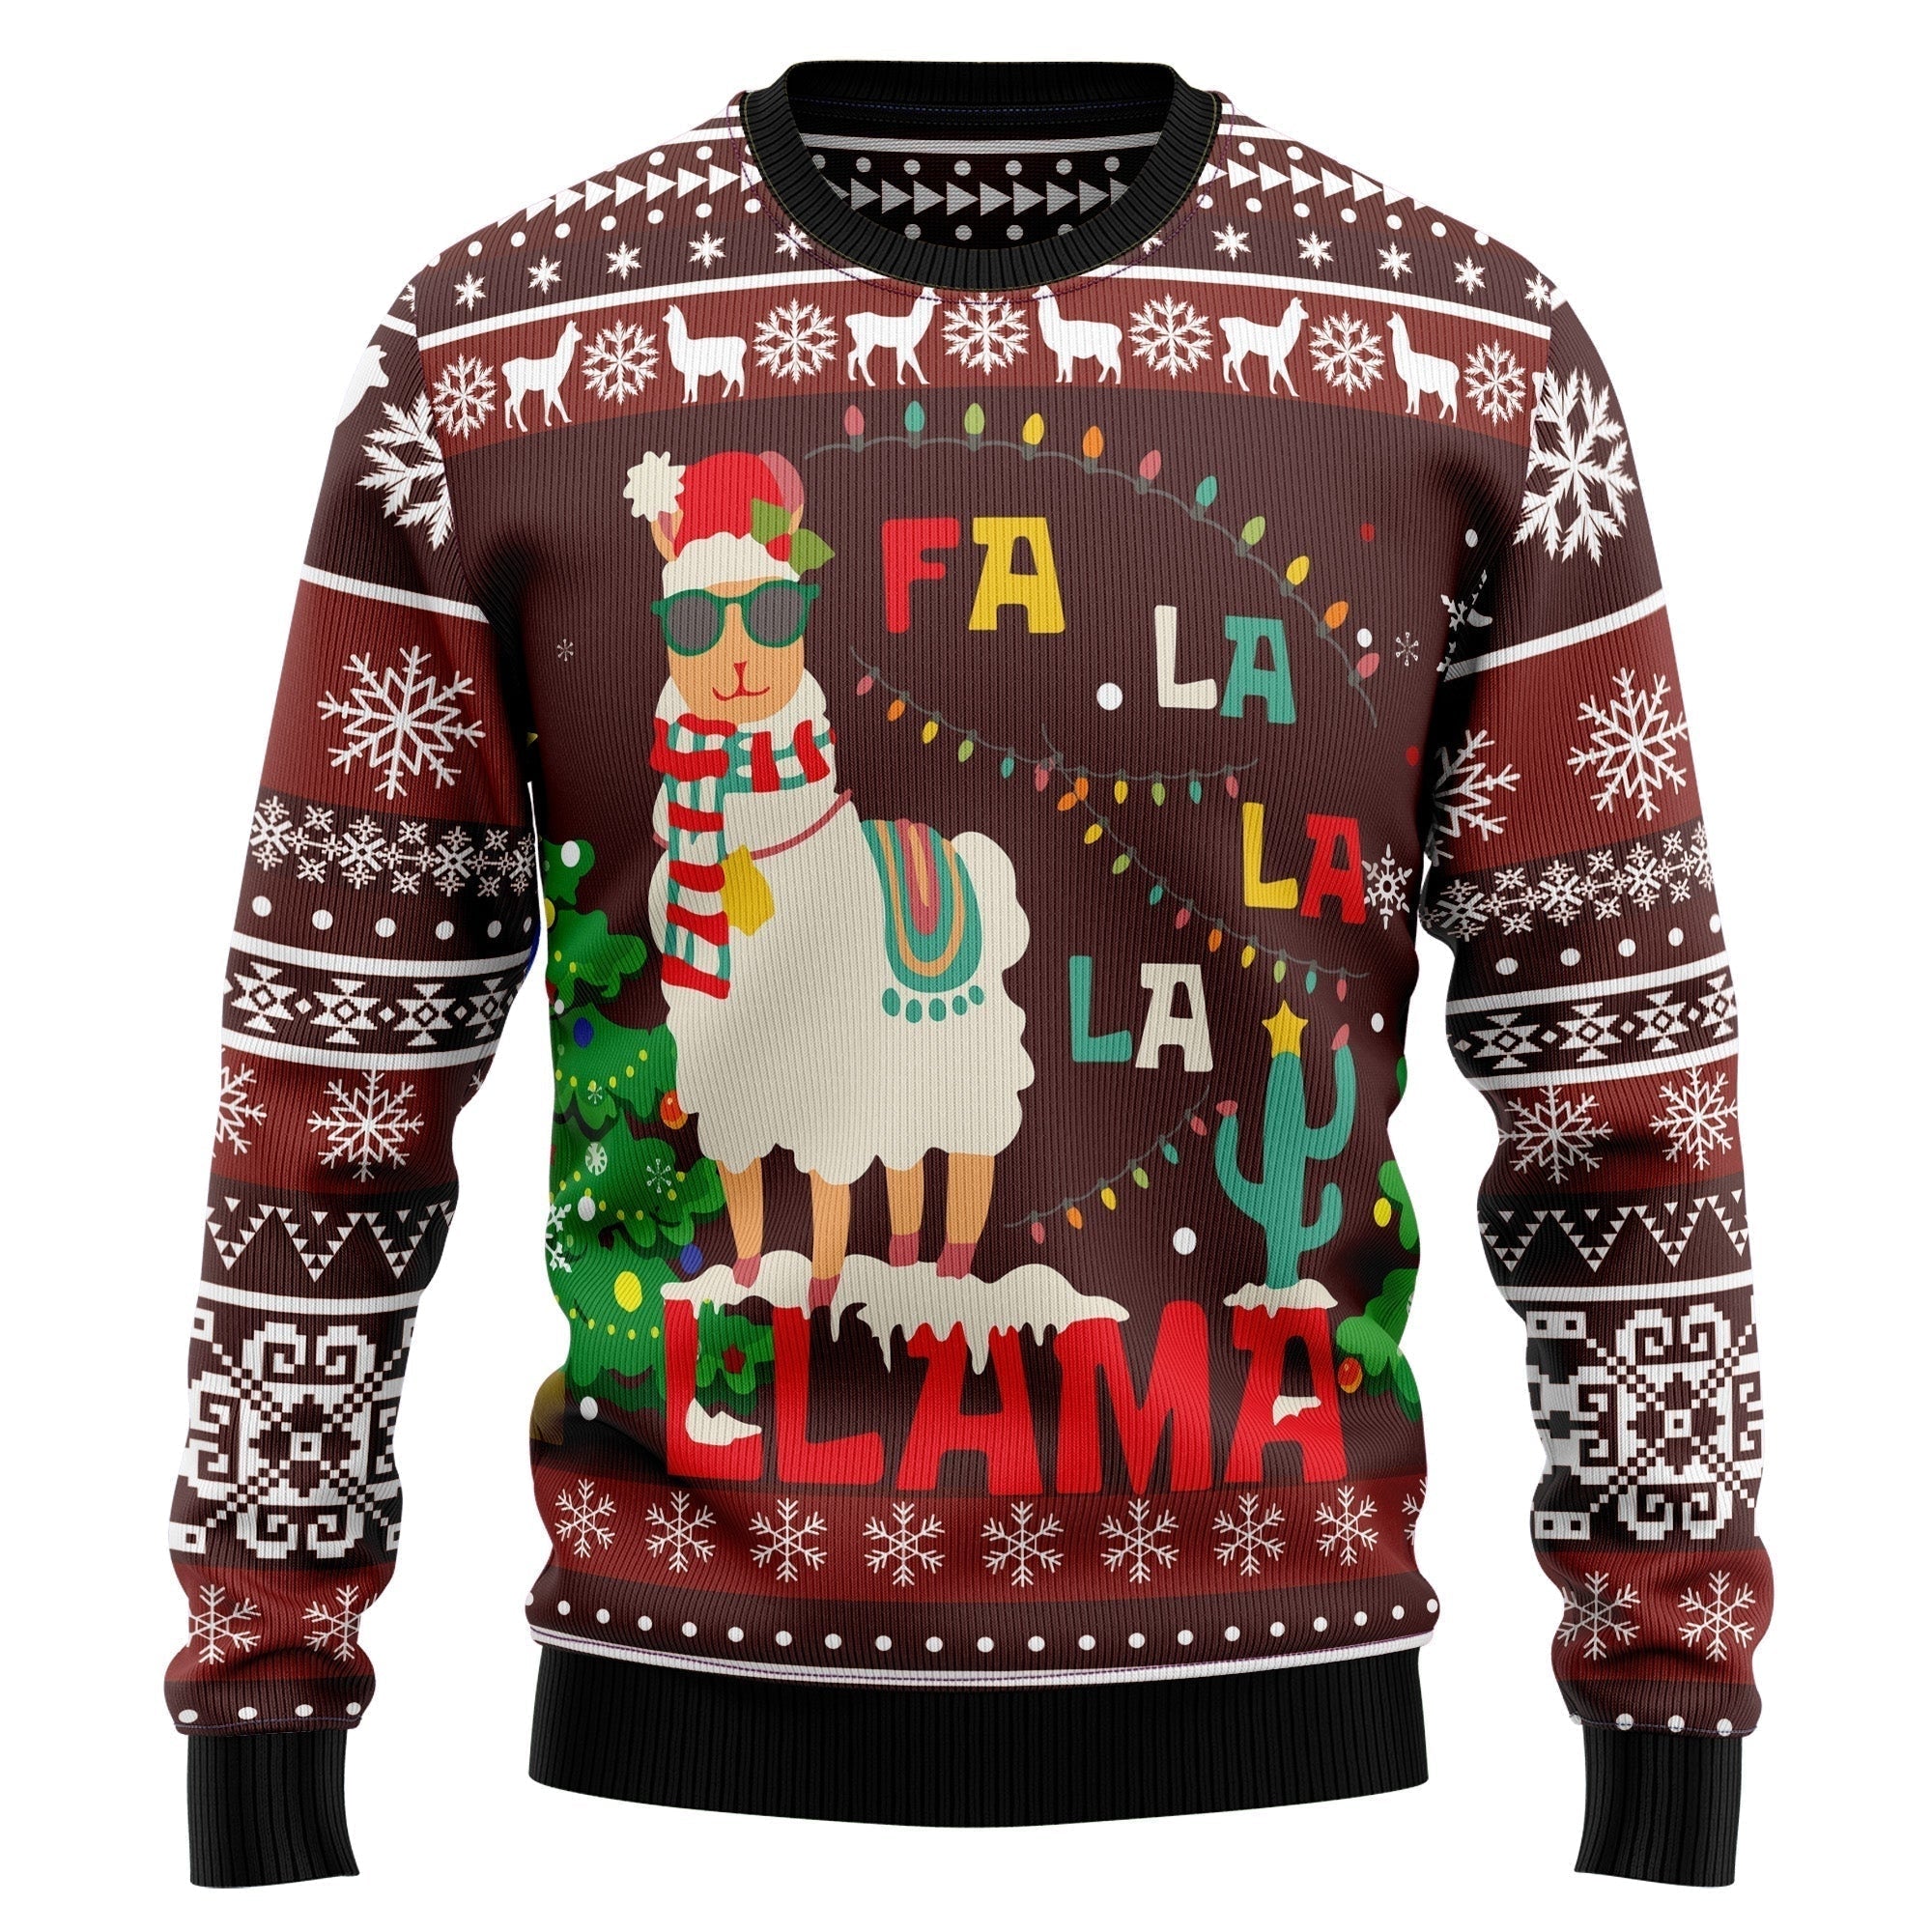 Llama Santa Falalala Ugly Christmas Sweater, Perfect Gift and Outfit For Christmas, Winter, New Year Of Llama Lovers